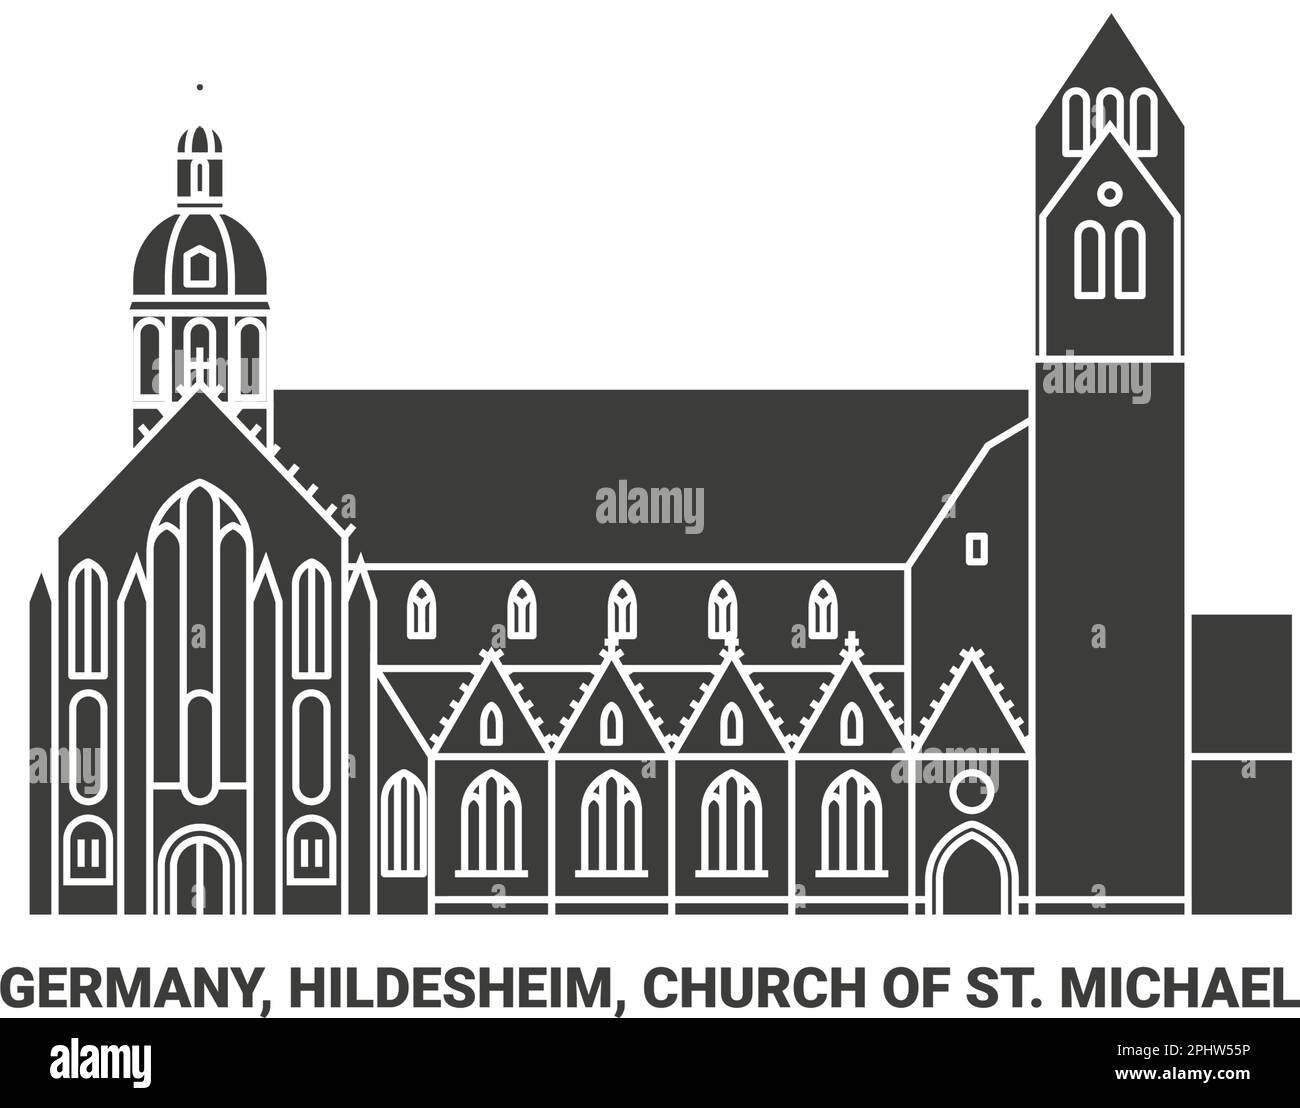 Germany, Hildesheim, Church Of St. Michael travel landmark vector illustration Stock Vector